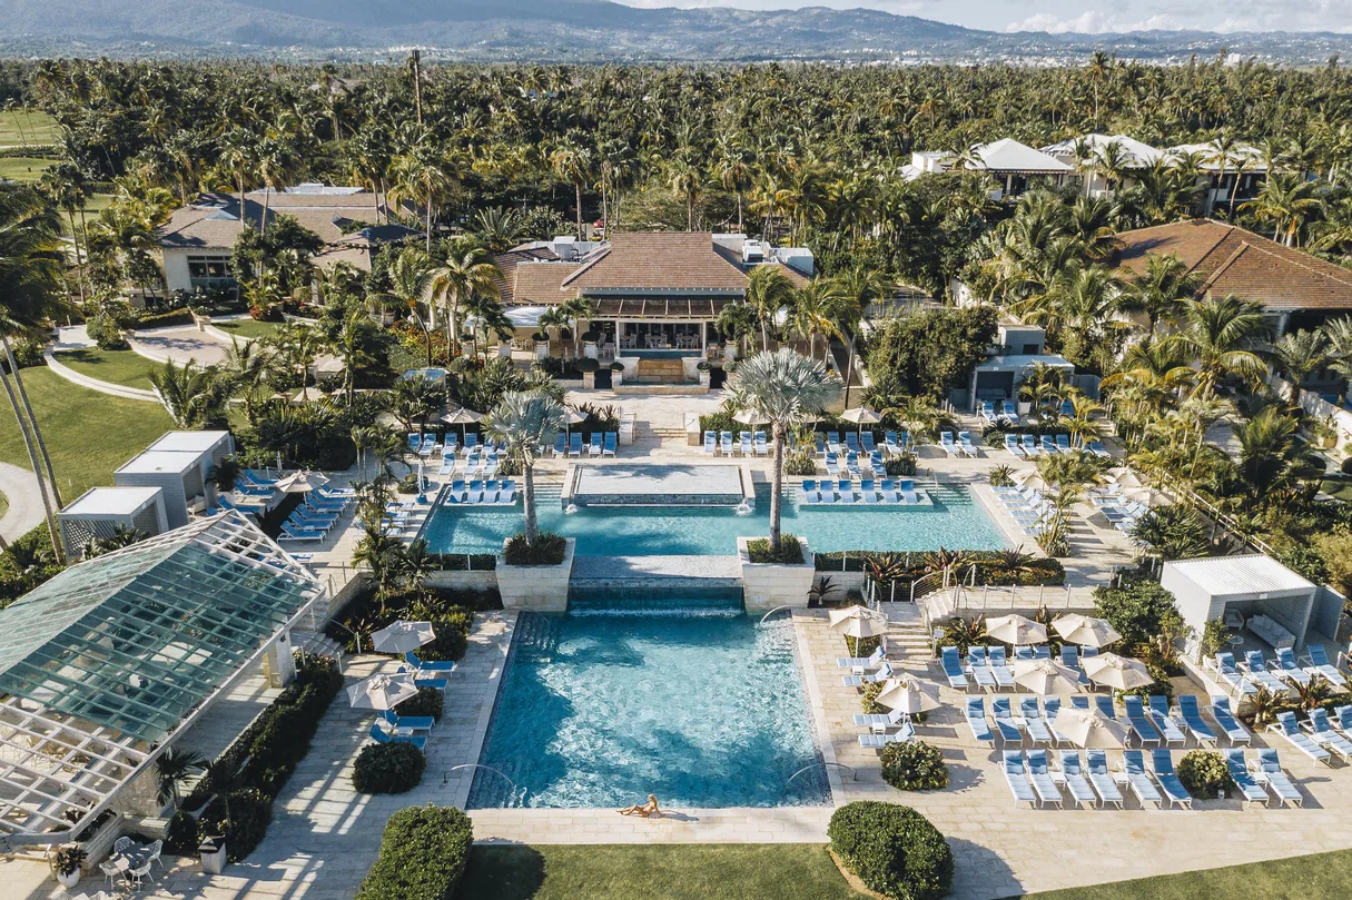 The St. Regis Bahia Beach Resort, Puerto Rico Beach Club Pool & Facilities